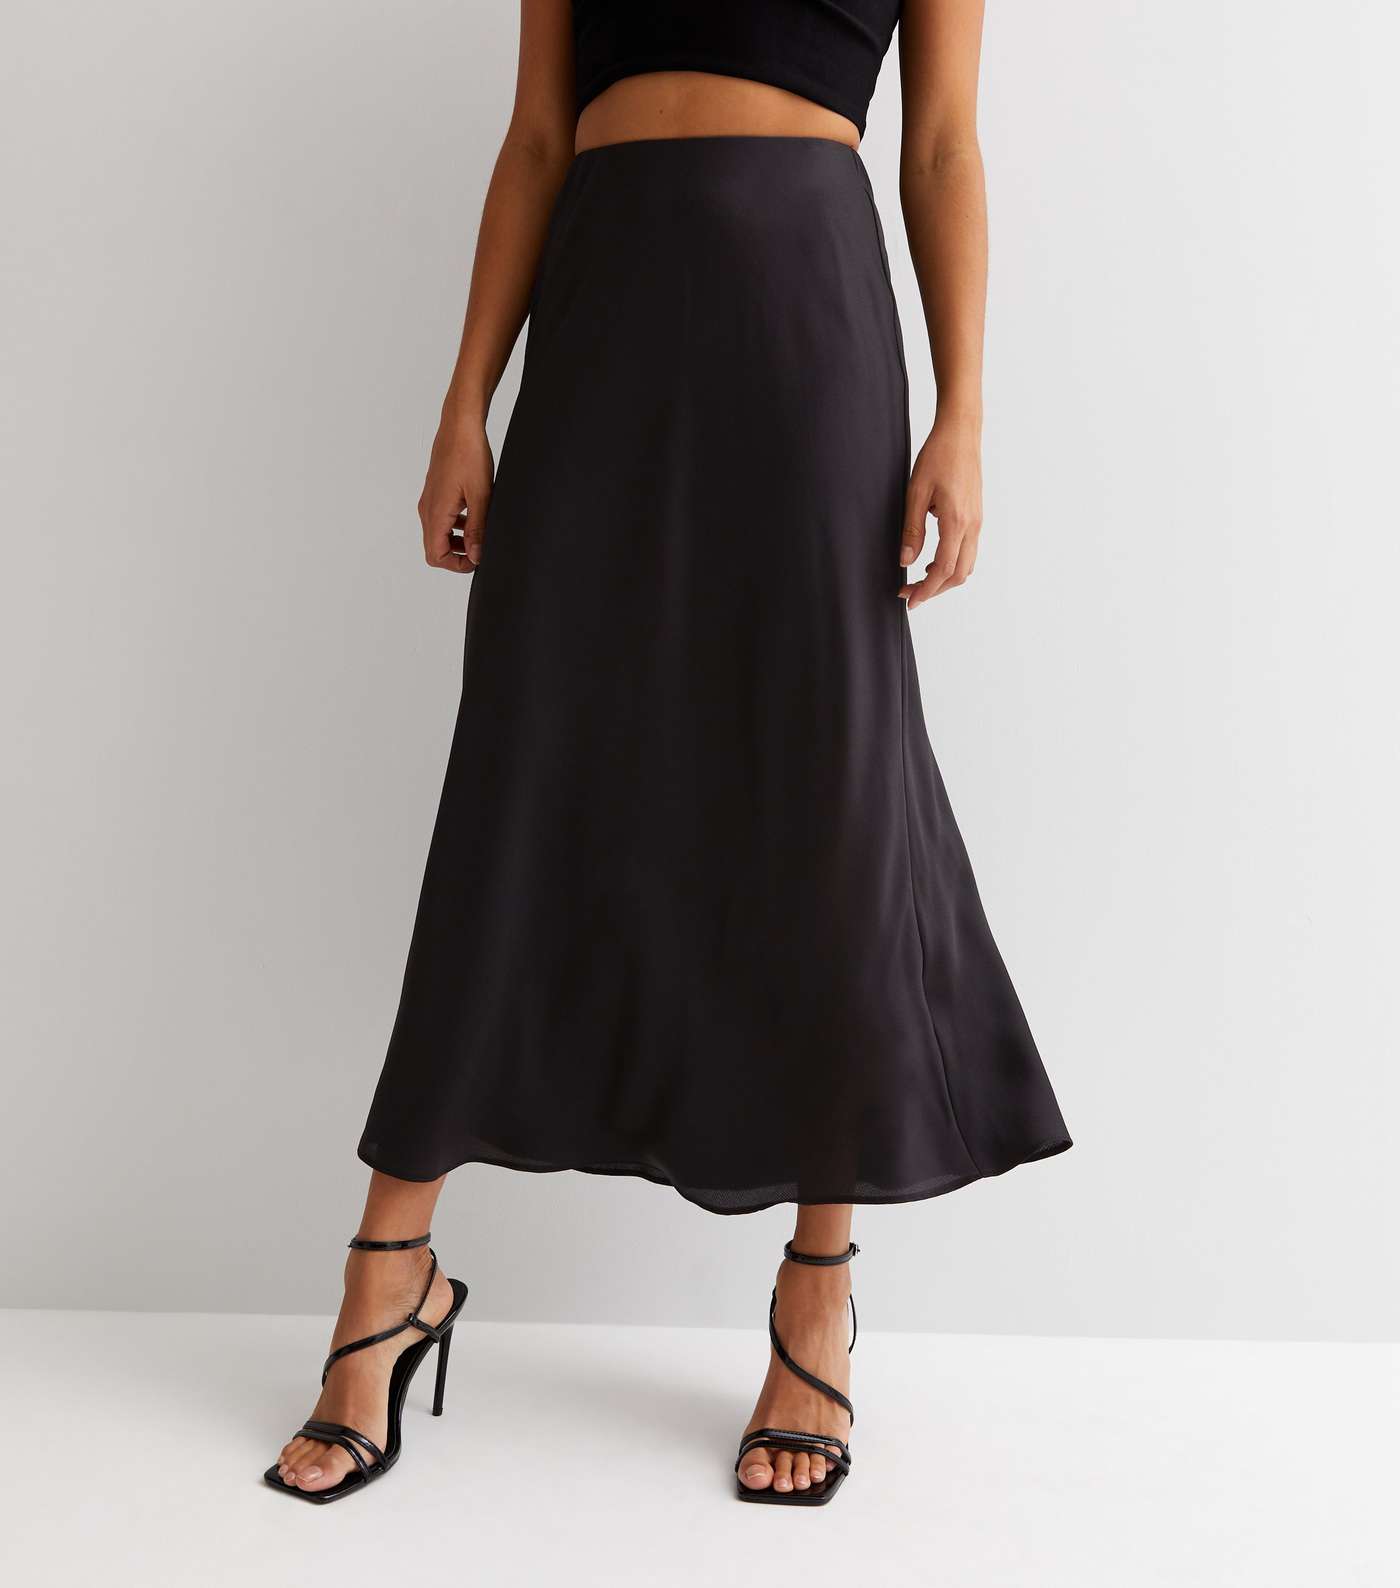 Black Satin Bias Cut Midi Skirt Image 2